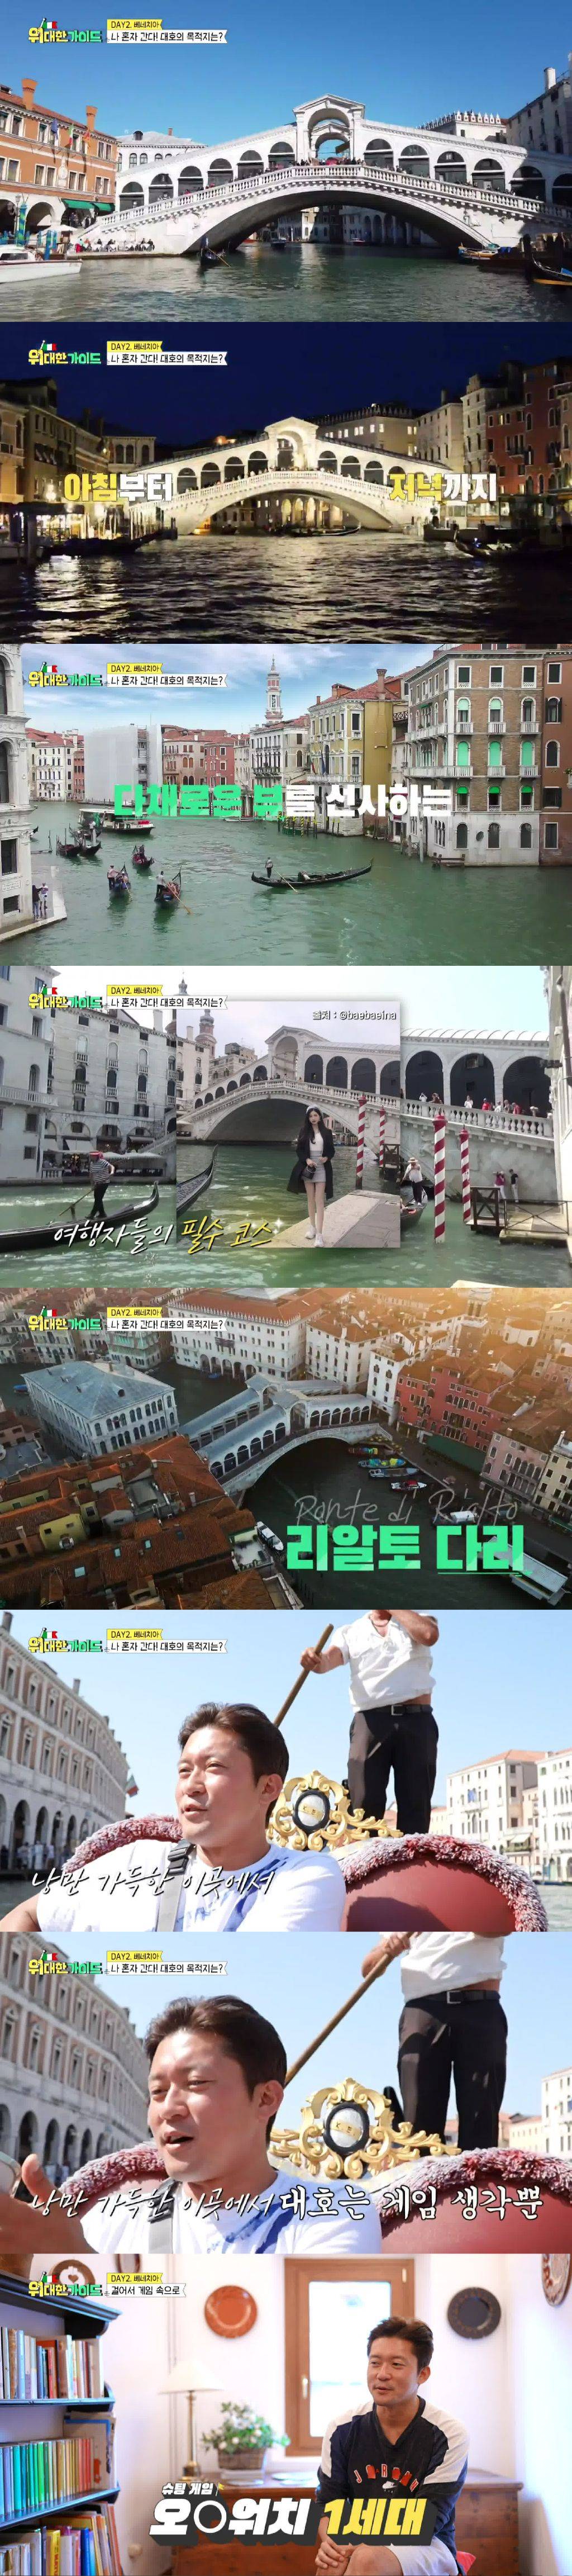 MBC 여행 프로에서 이탈리아 여행 간 김대호 아나운서 근황 | 인스티즈